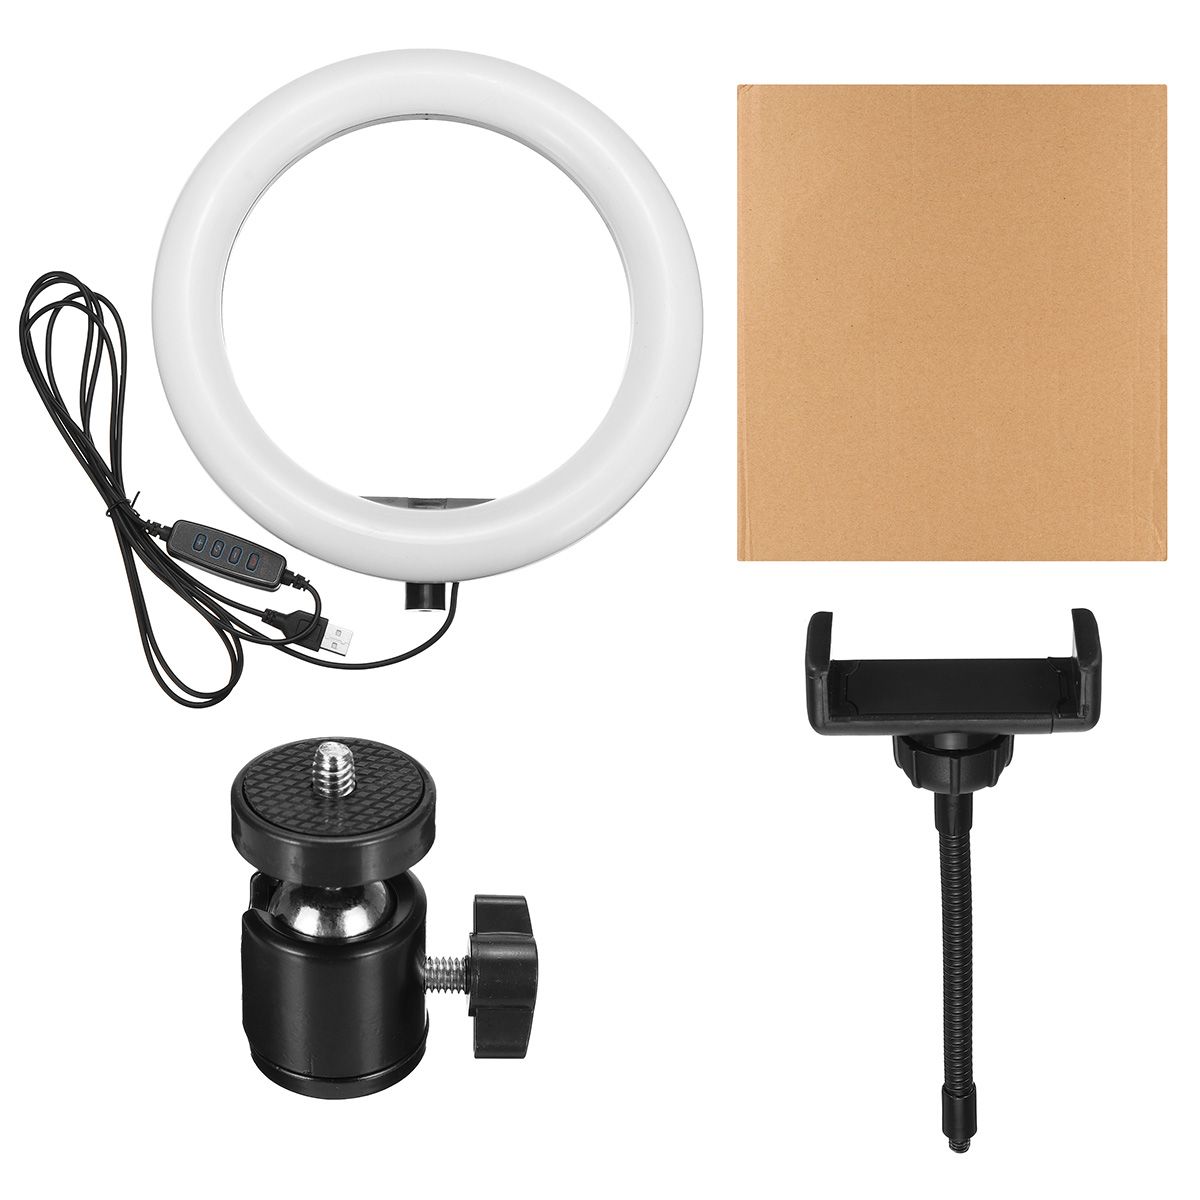 26cm-120-Lamp-Beads-LED-Ring-Light-3-Modes-Dimmable-Selfie-Light--with-Phone-Holder-for-Youtube-Stre-1716410